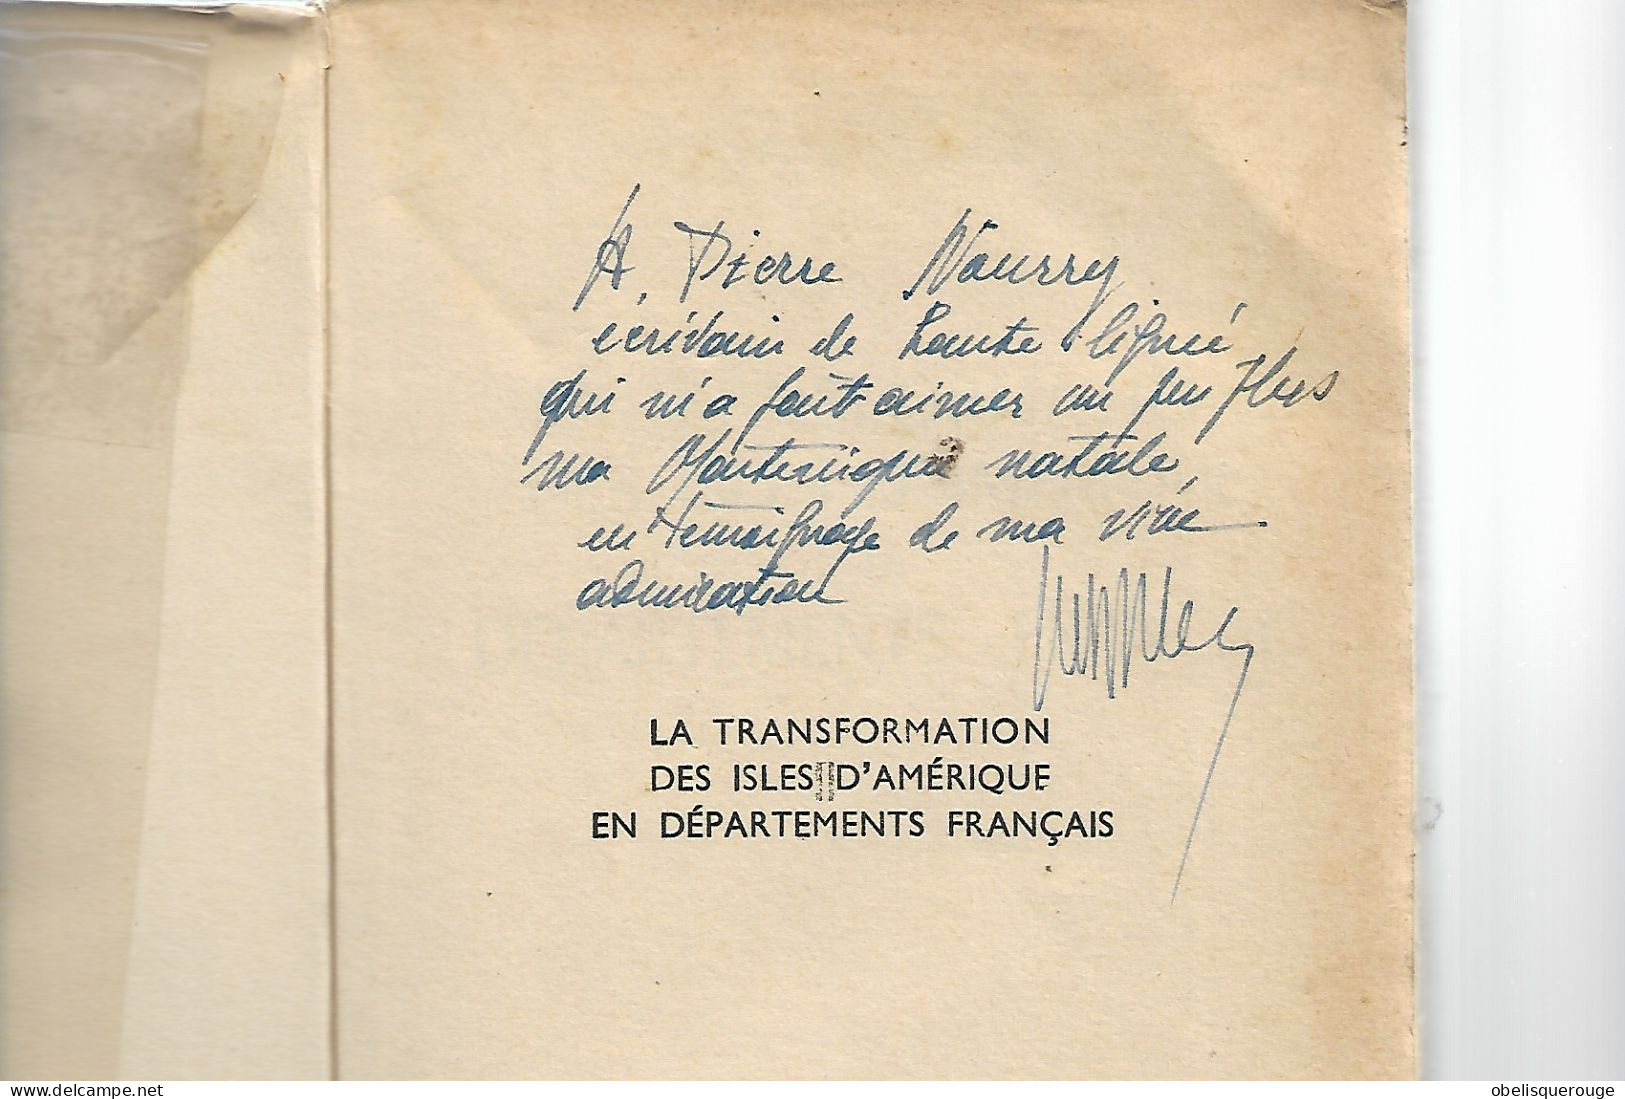 LIVRE Martinique VICTOR SABLE TRANSFORMATION DES ILES EN DEPARTEMENT FRANCAIS DEDICACE 1955 - Libros Autografiados